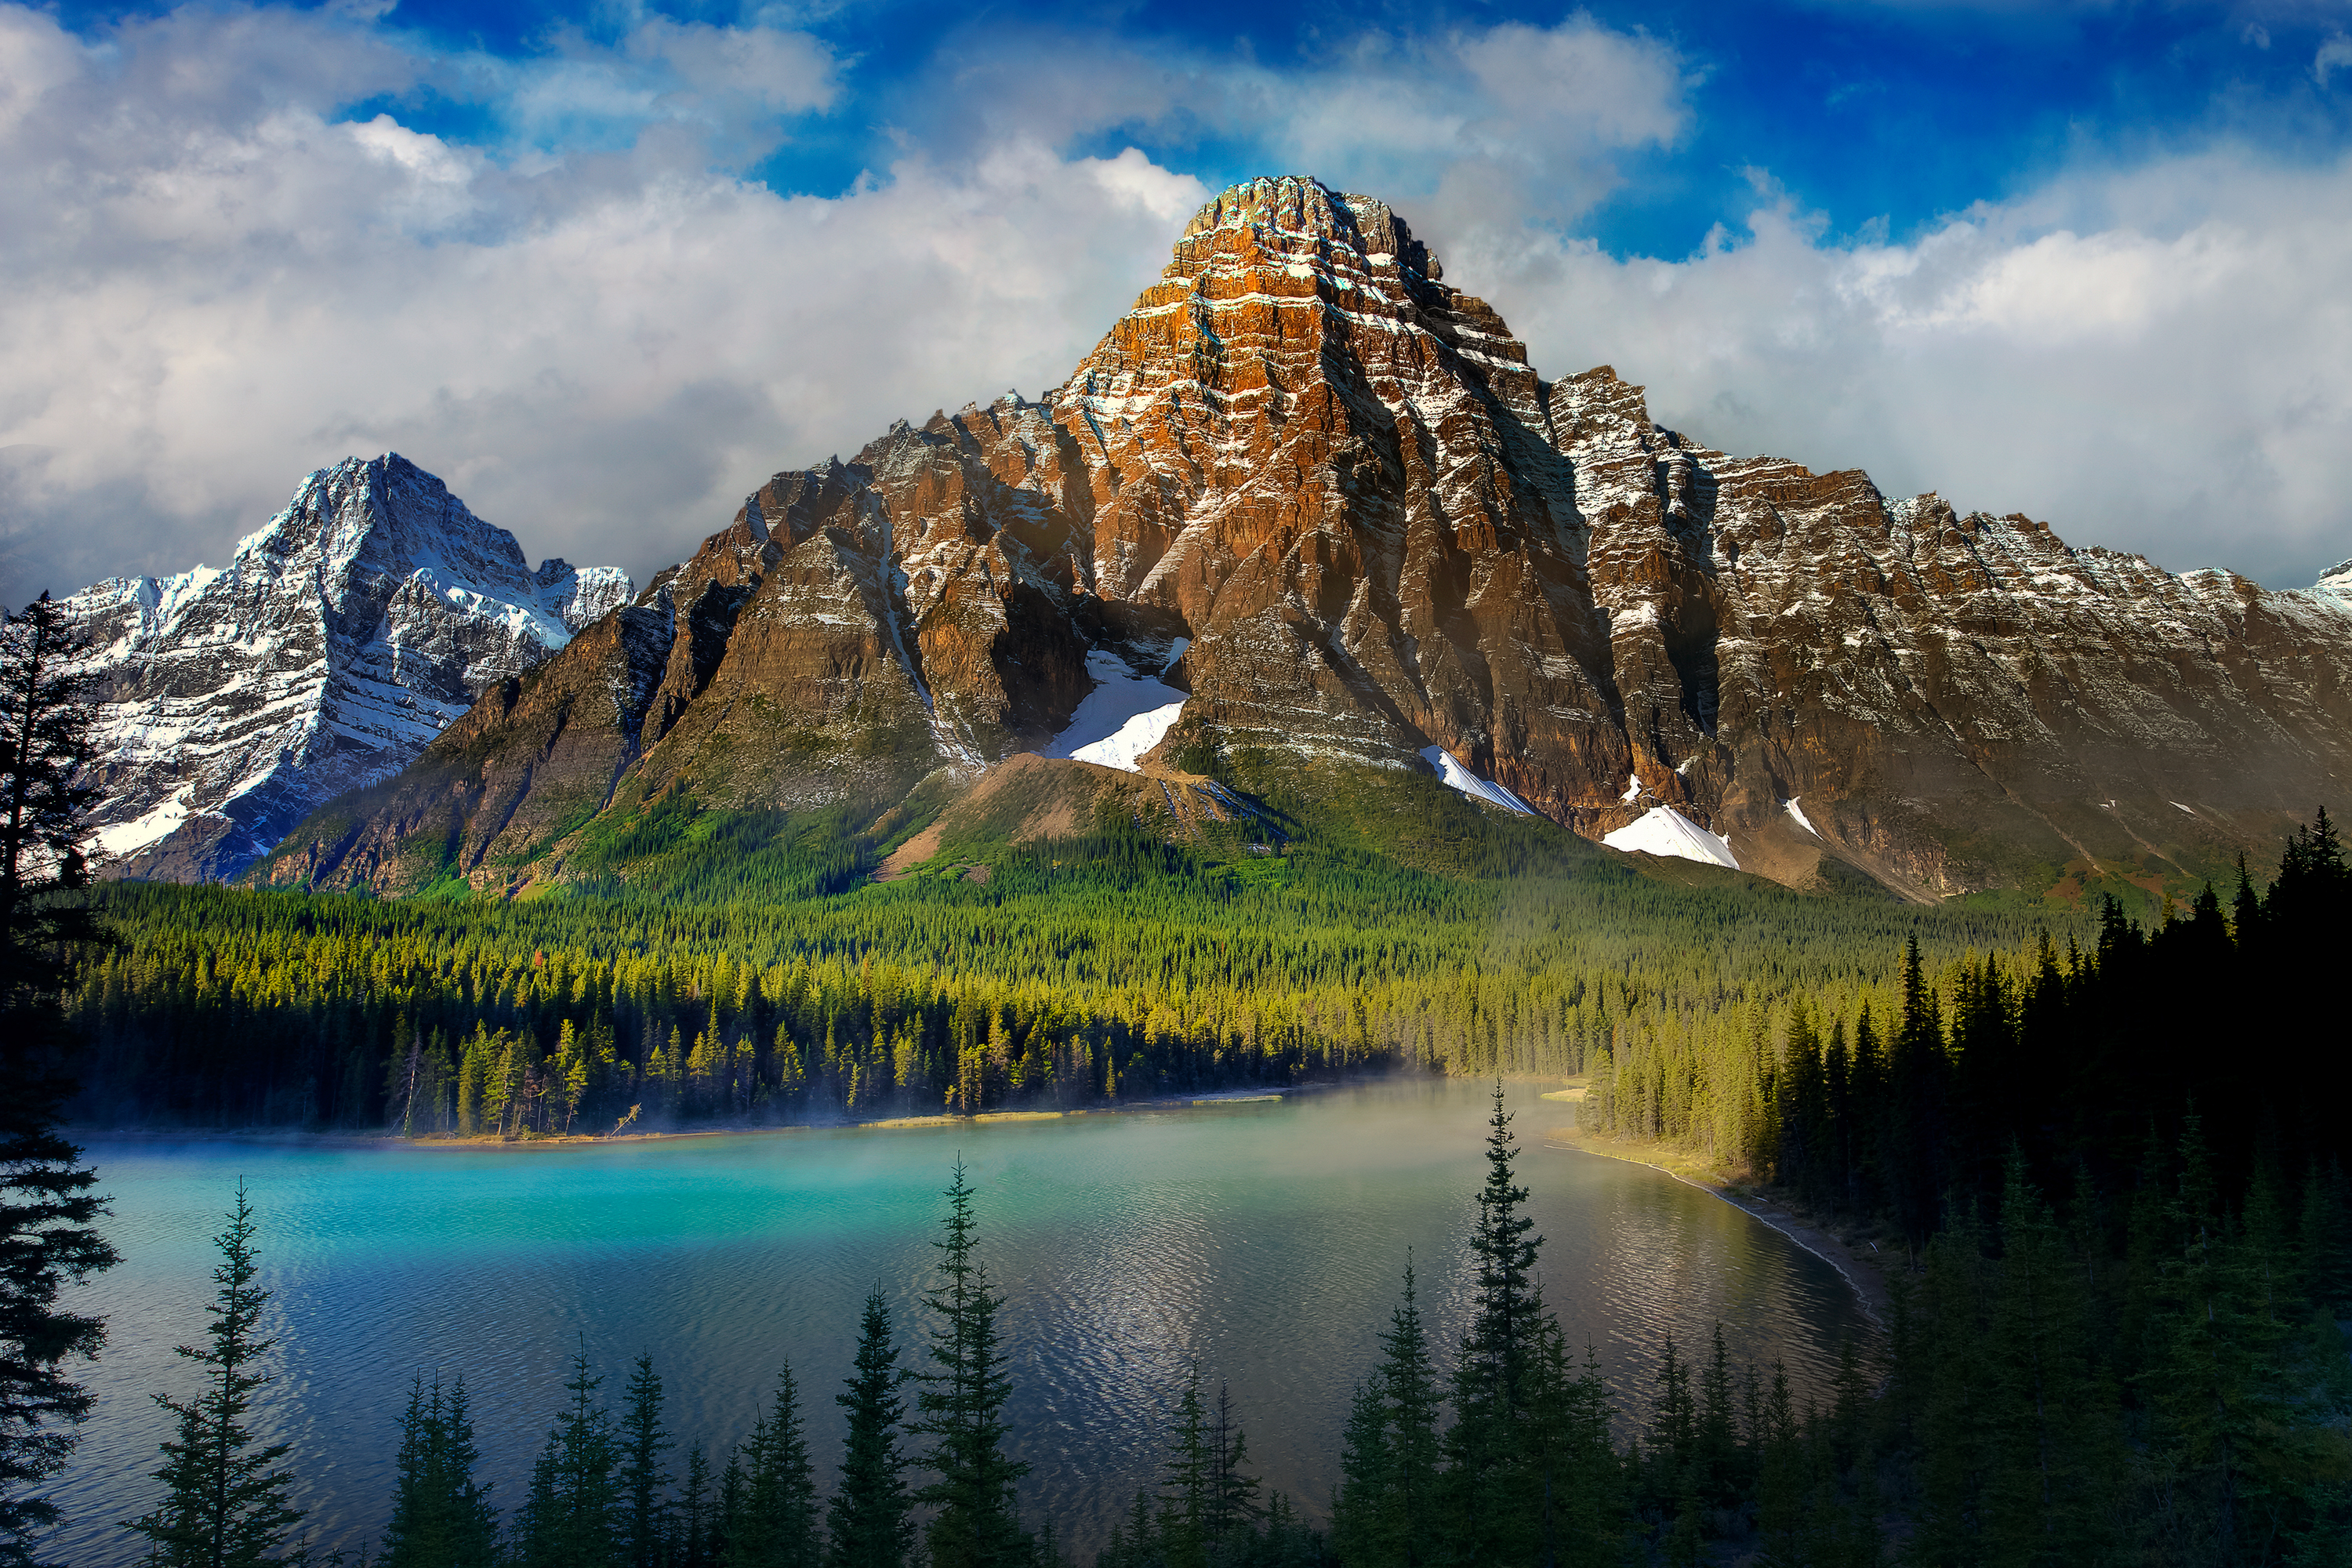 Download wallpaper 3000x2000 beautiful scenery mountains lake